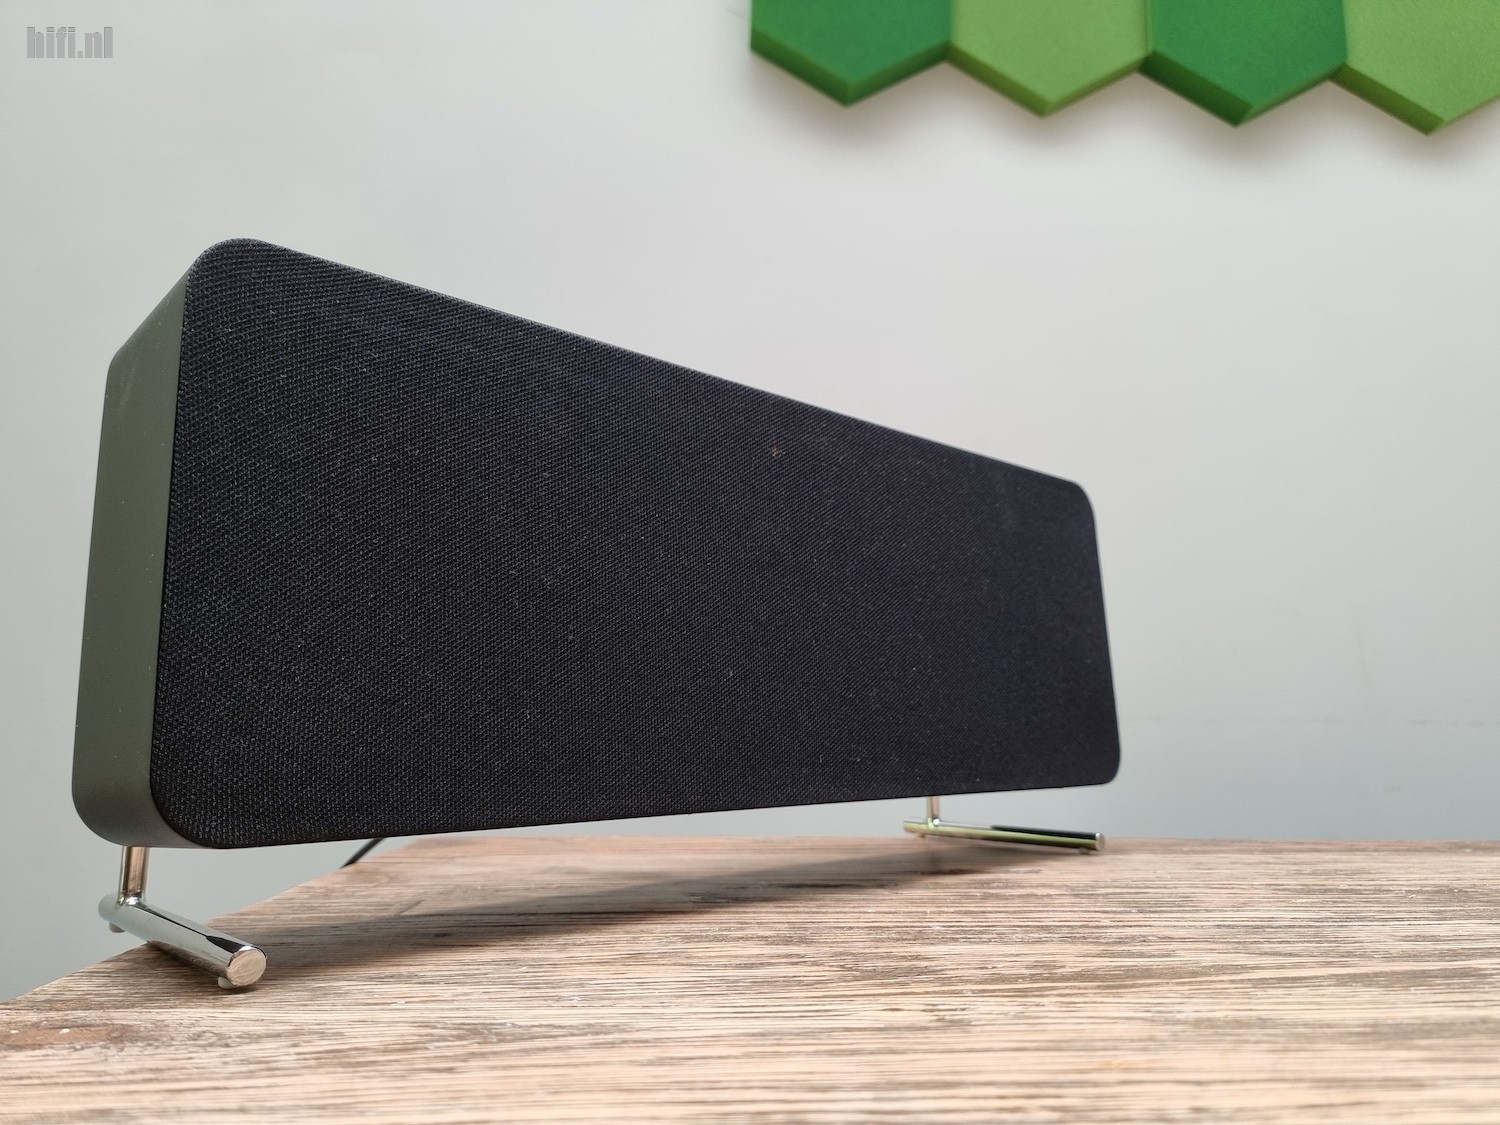 Winst verkenner details Review Braun Audio LE02 draadloze speaker vermomd als Dieter Rams vintage  audio